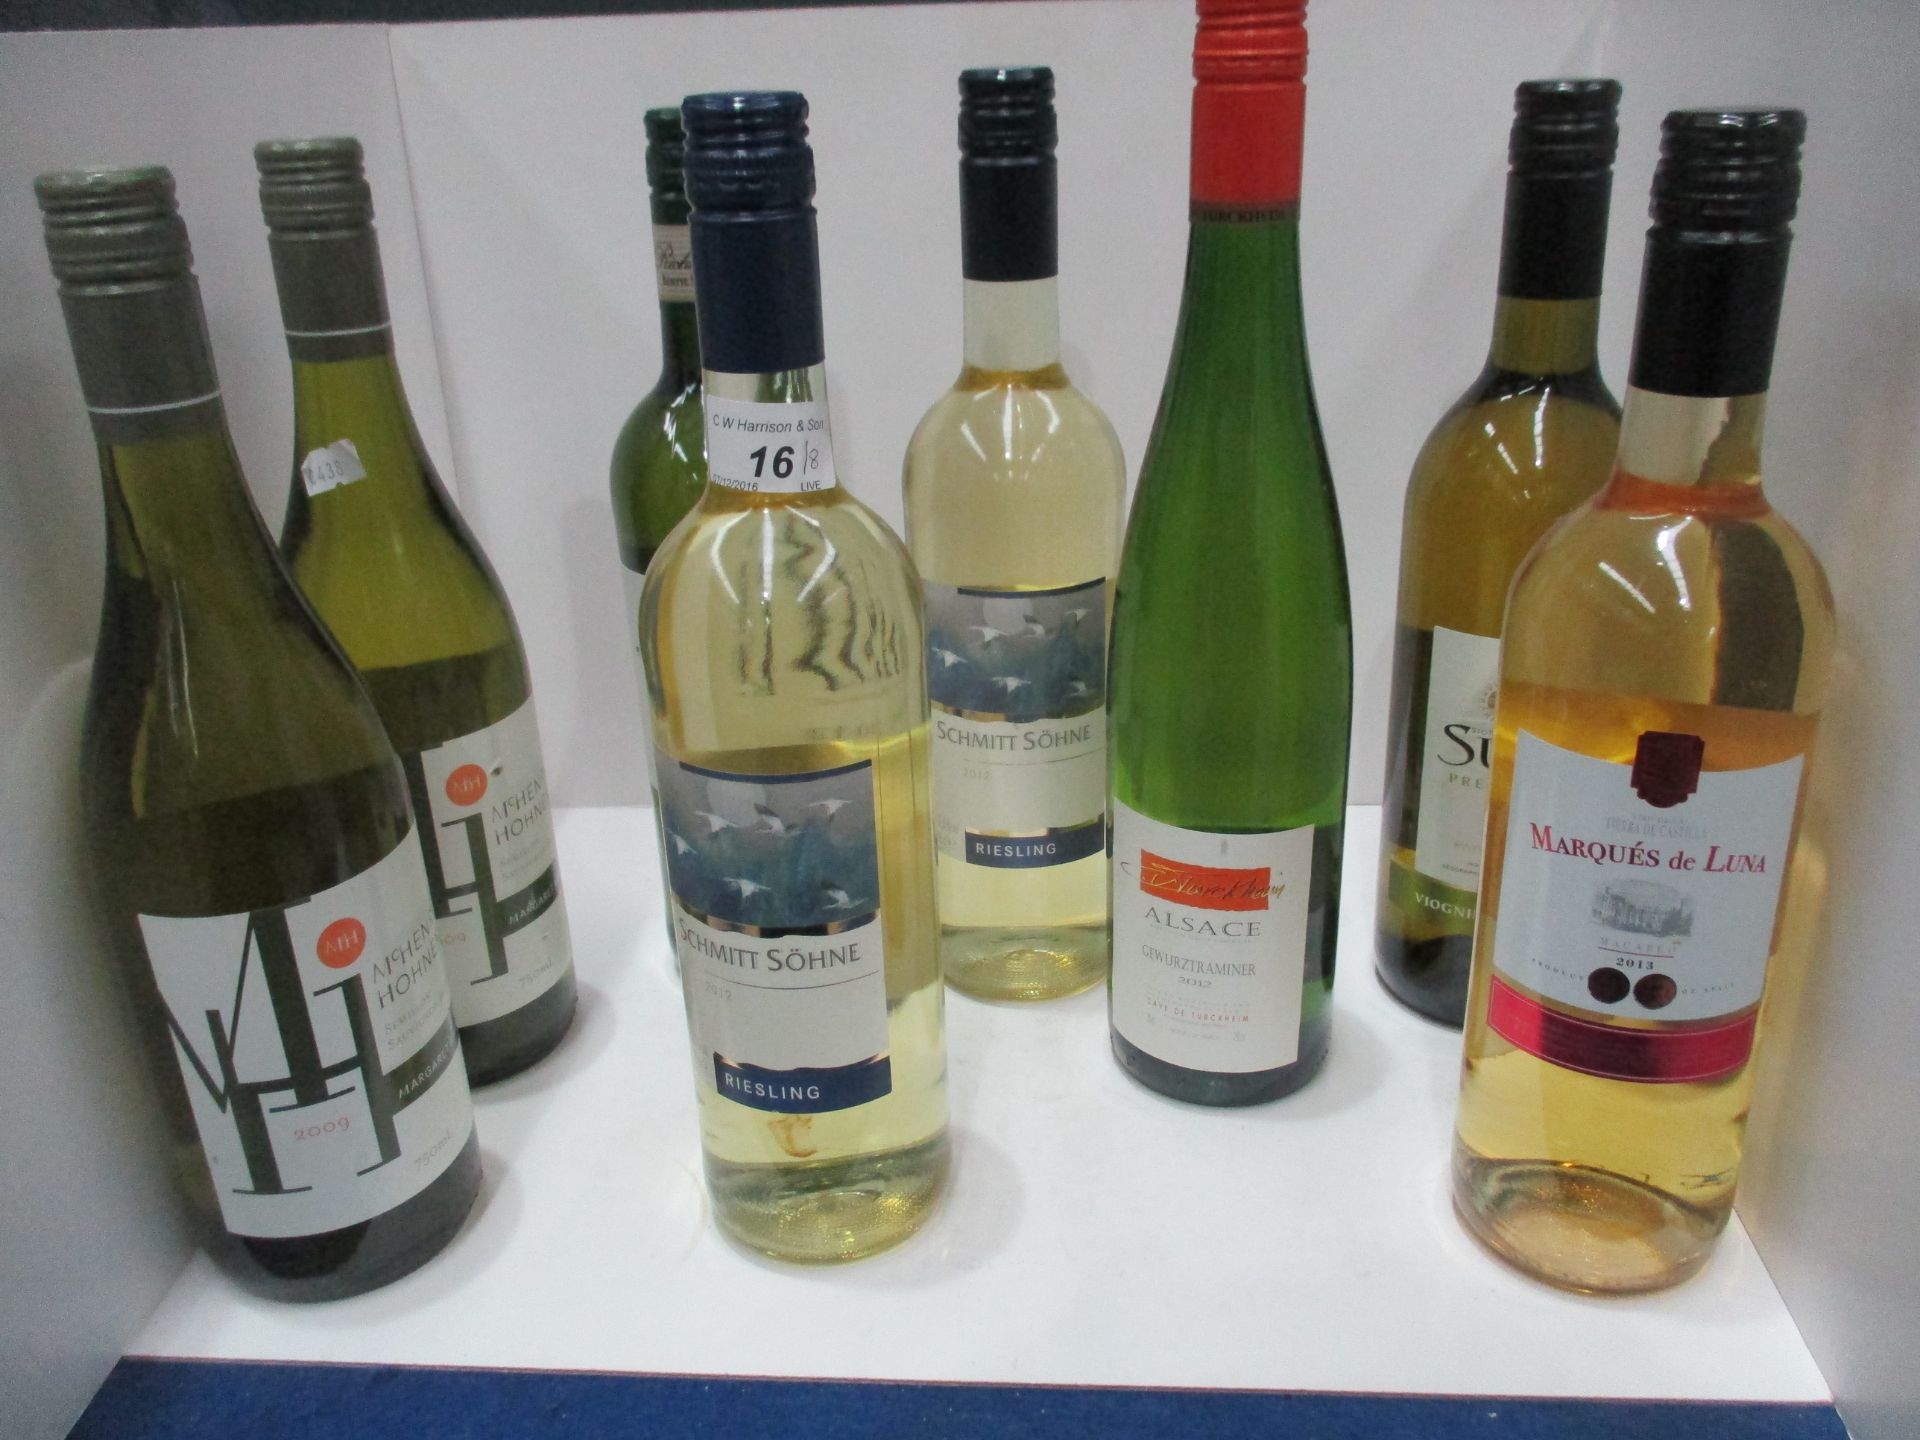 8 various 75cl bottles of white wine including 2 x Mc Henry Hohen Semillon Sauvignon blanc, 2 x